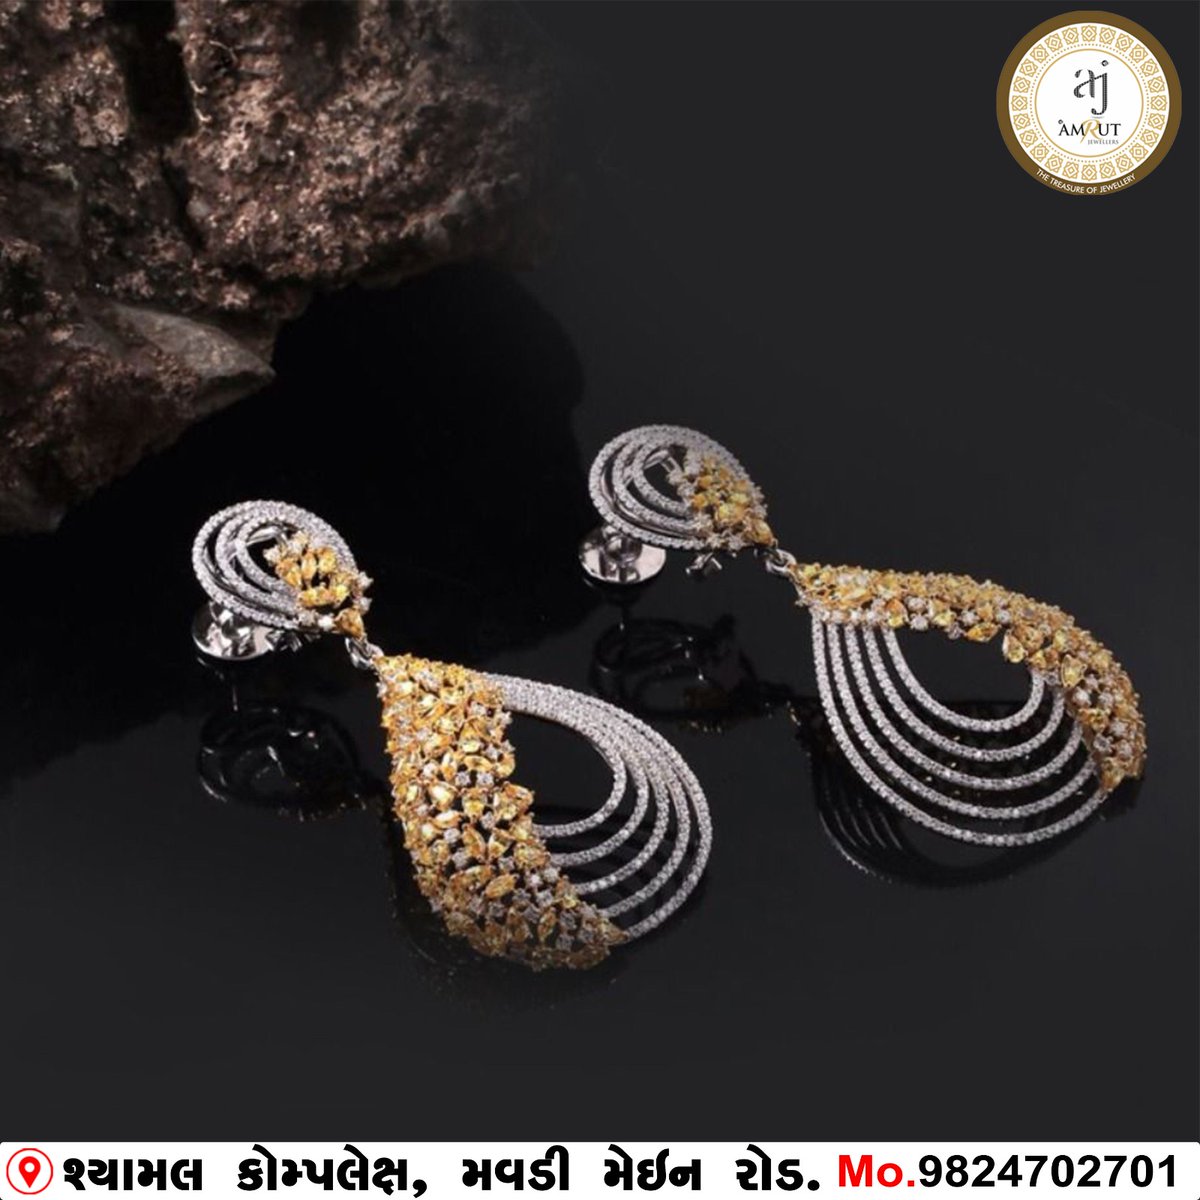 Amrut Jewels presents a Ravishing Gold & Diamond Earrings, Adorned with Natural Diamonds.

#amrutjewellers #jewellers #jewelry #statementjewelry  #earrings #heritagejewellery #diamondjewellery #earringstyle #jumka #jumkaearrings #mavdi #rajkot #gujarat